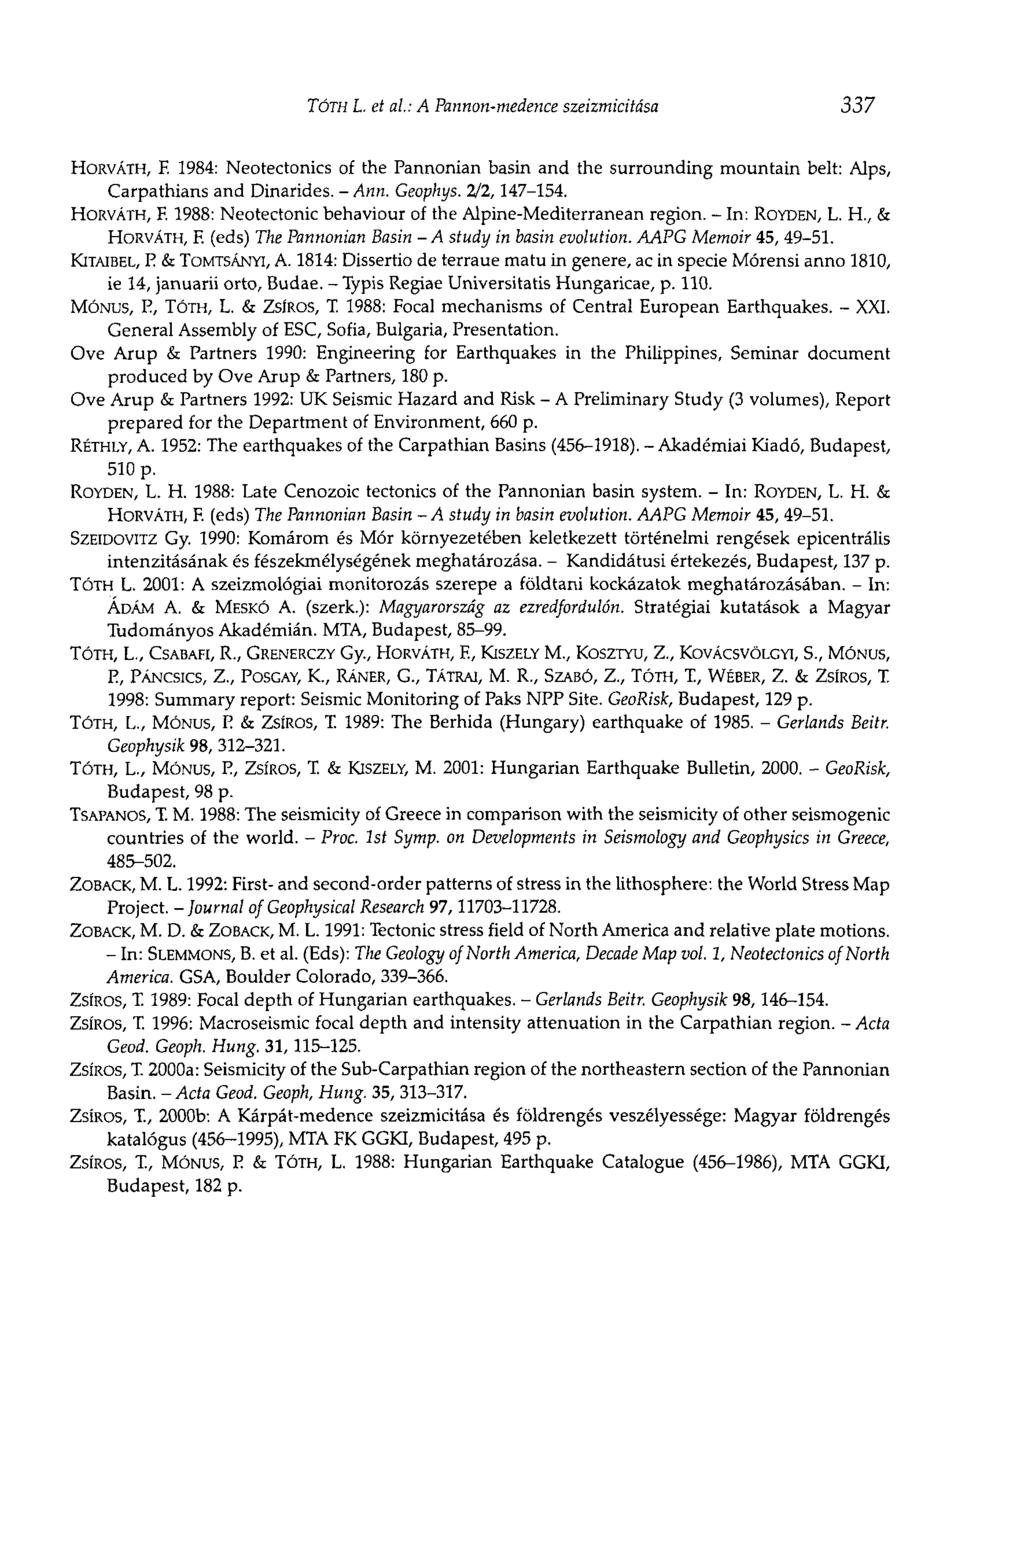 TÓTH L. et al: A Pannon-medence szeizmicitása 337 HORVÁTH, F. 1984: Neotectonics of the Pannonian basin and the surrounding mountain belt: Alps, Carpathians and Dinarides. - Ann. Geophys. 2/2,147-154.